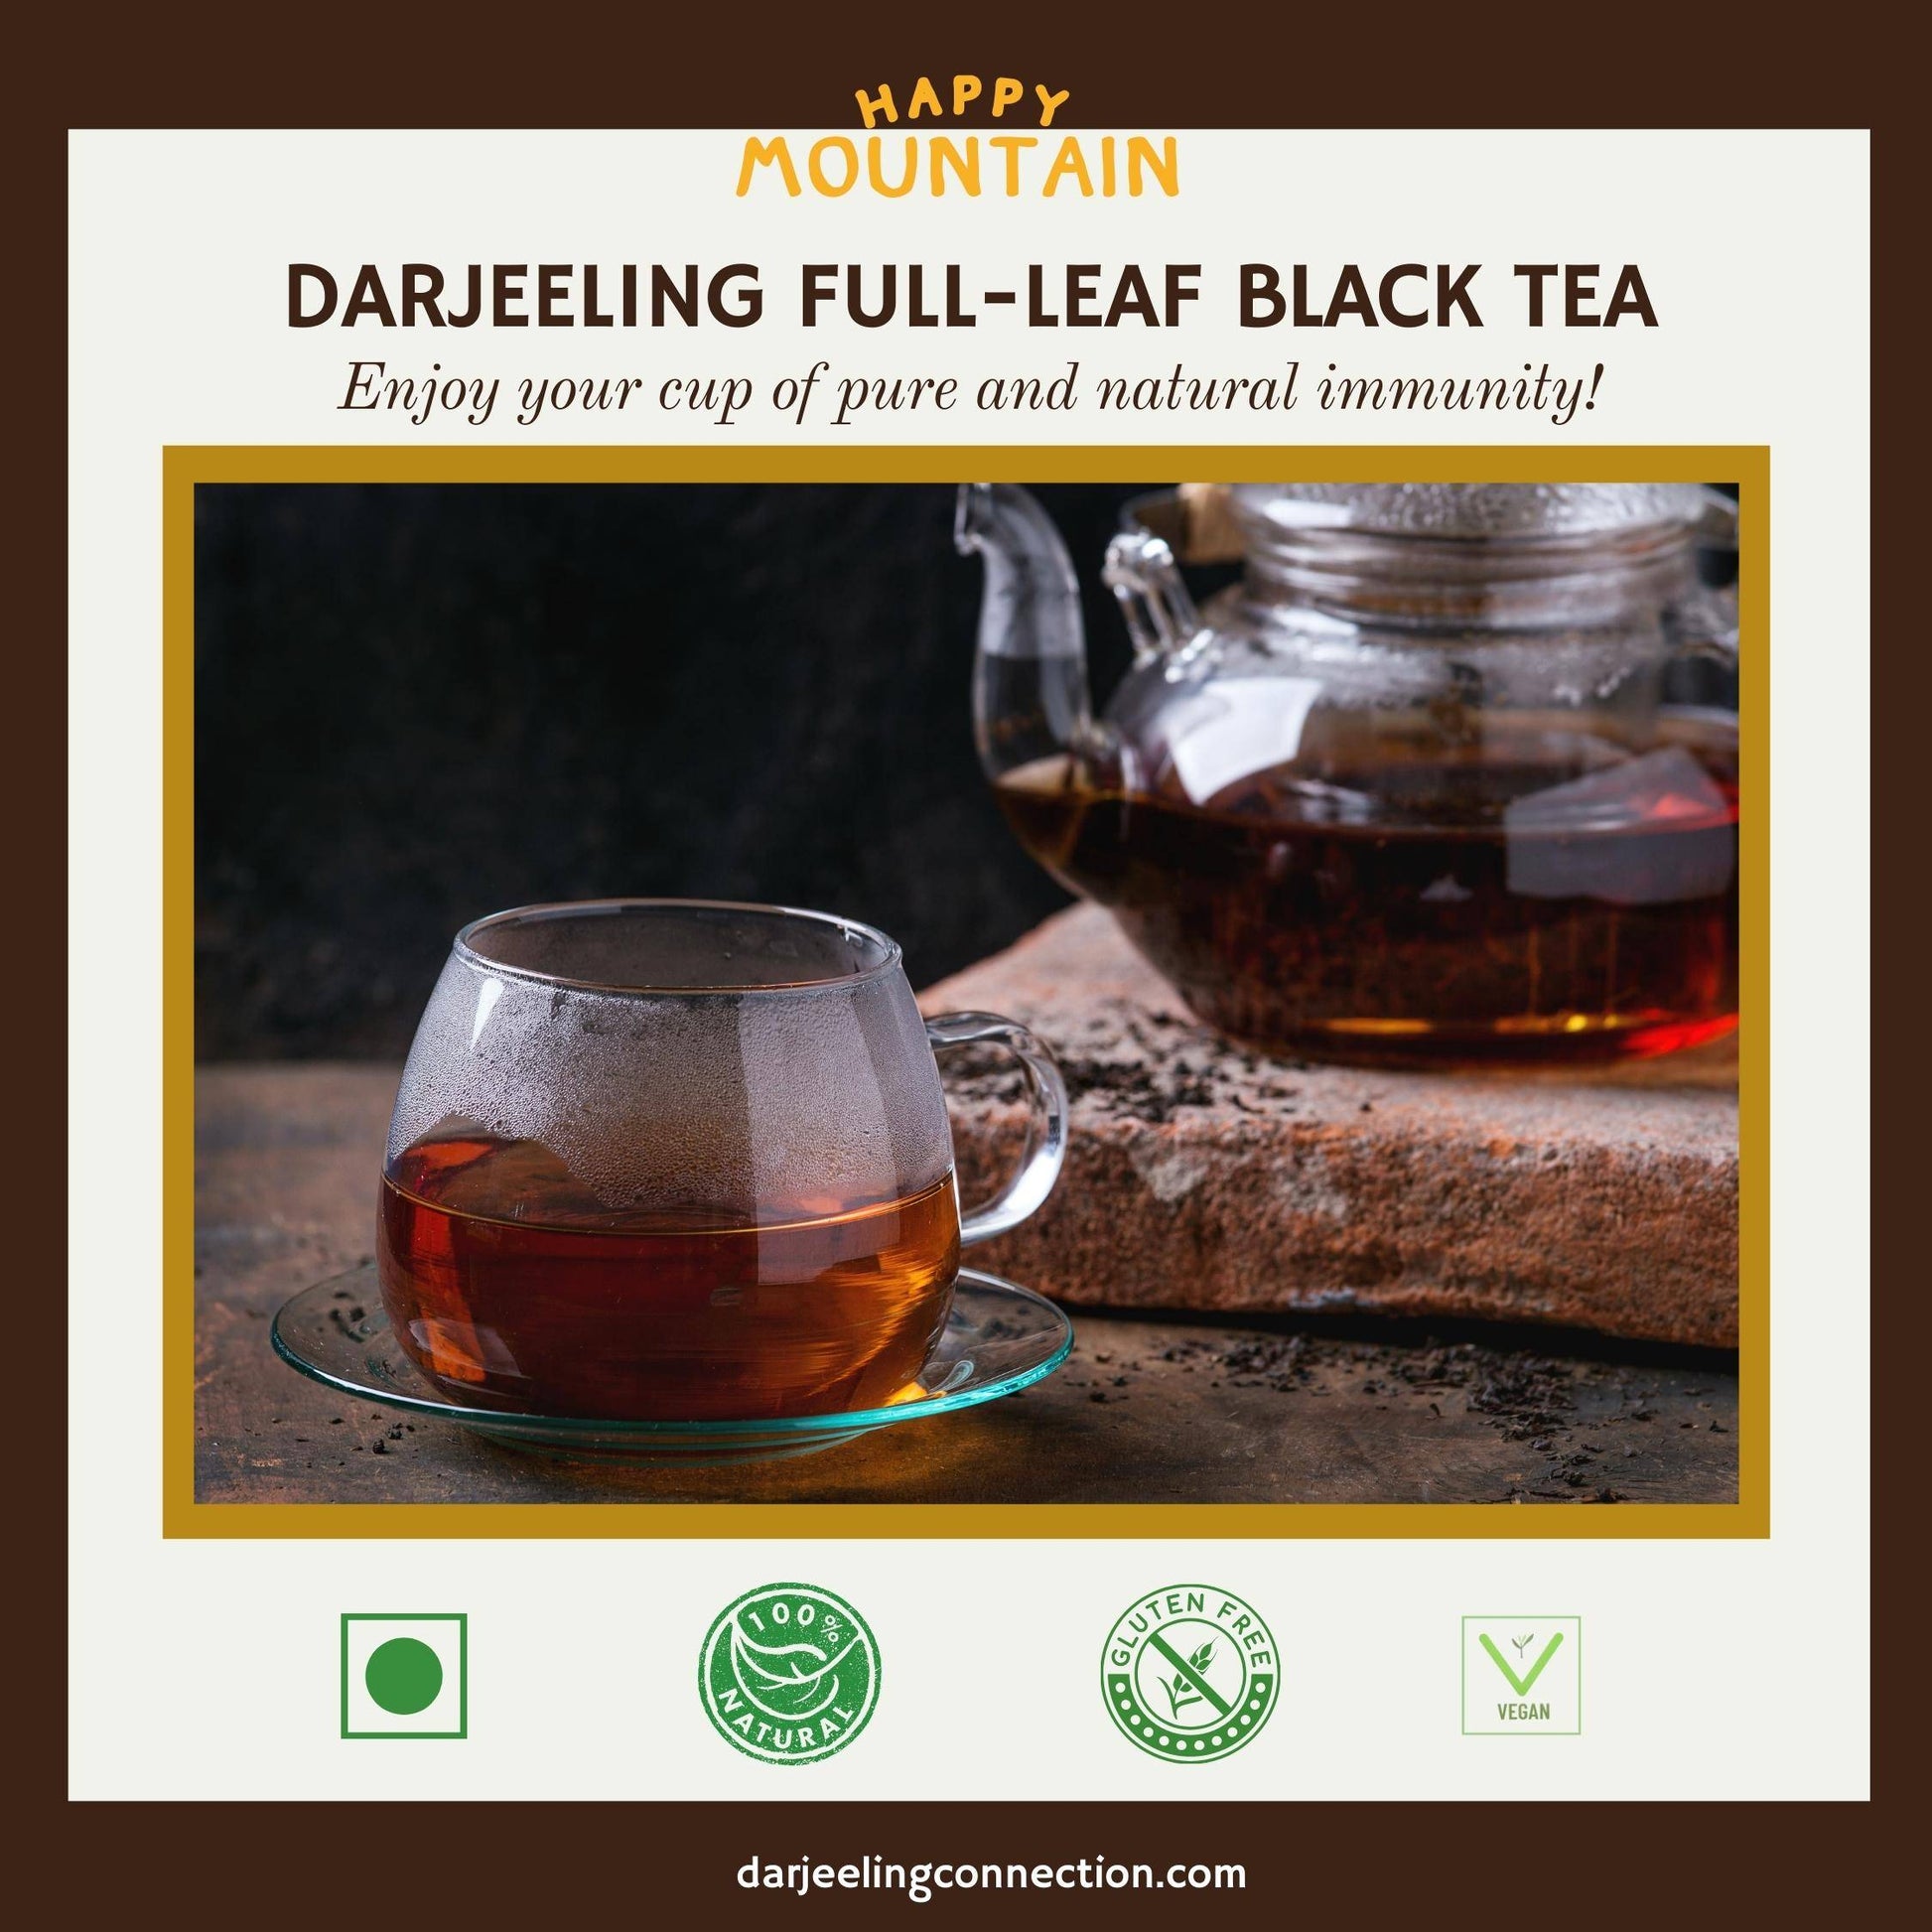 Darjeeling Full-Leaf Black Tea - Happy Mountain